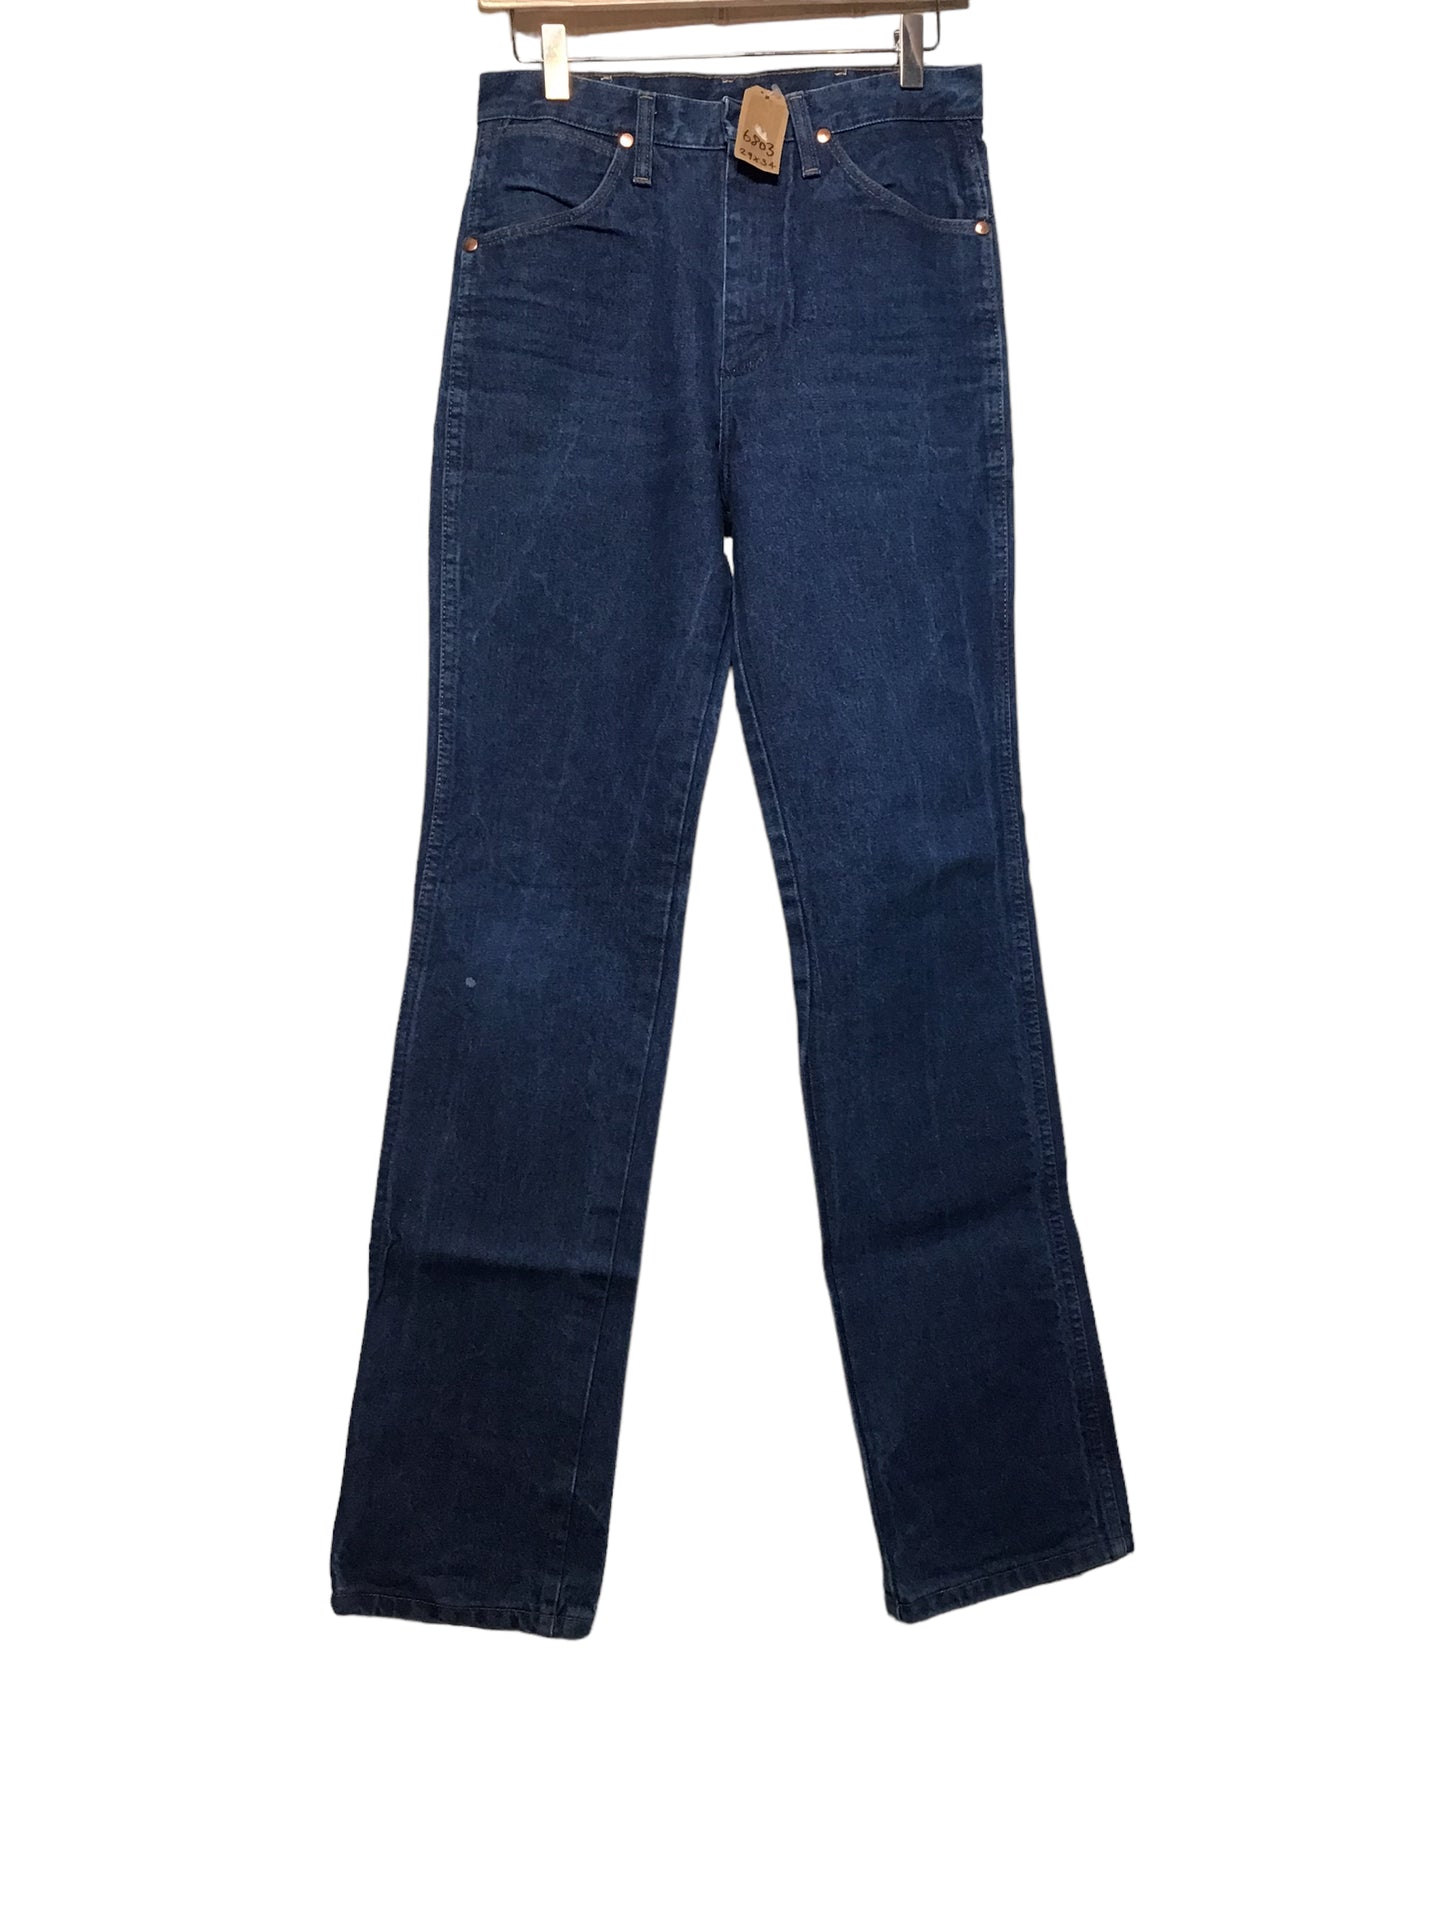 Wrangler Jeans (29x34)